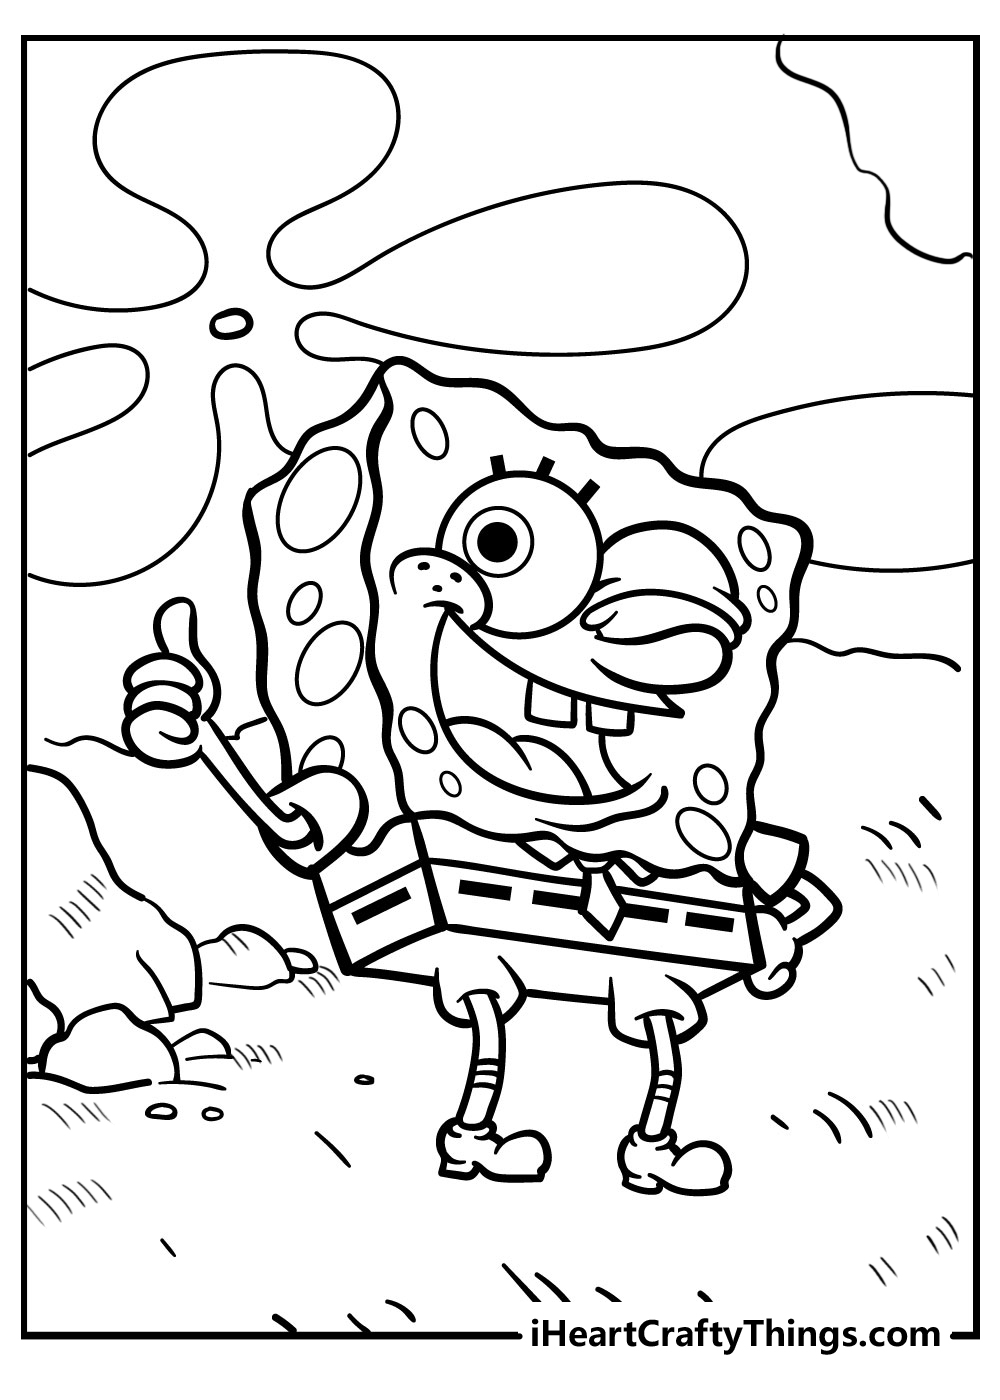 Spongebob Squarepants Coloring Book : An Interesting Coloring Book  Including Lots Of Images Of Spongebob Squarepants Which Helps To Relax And  Relive Stress (Paperback) 